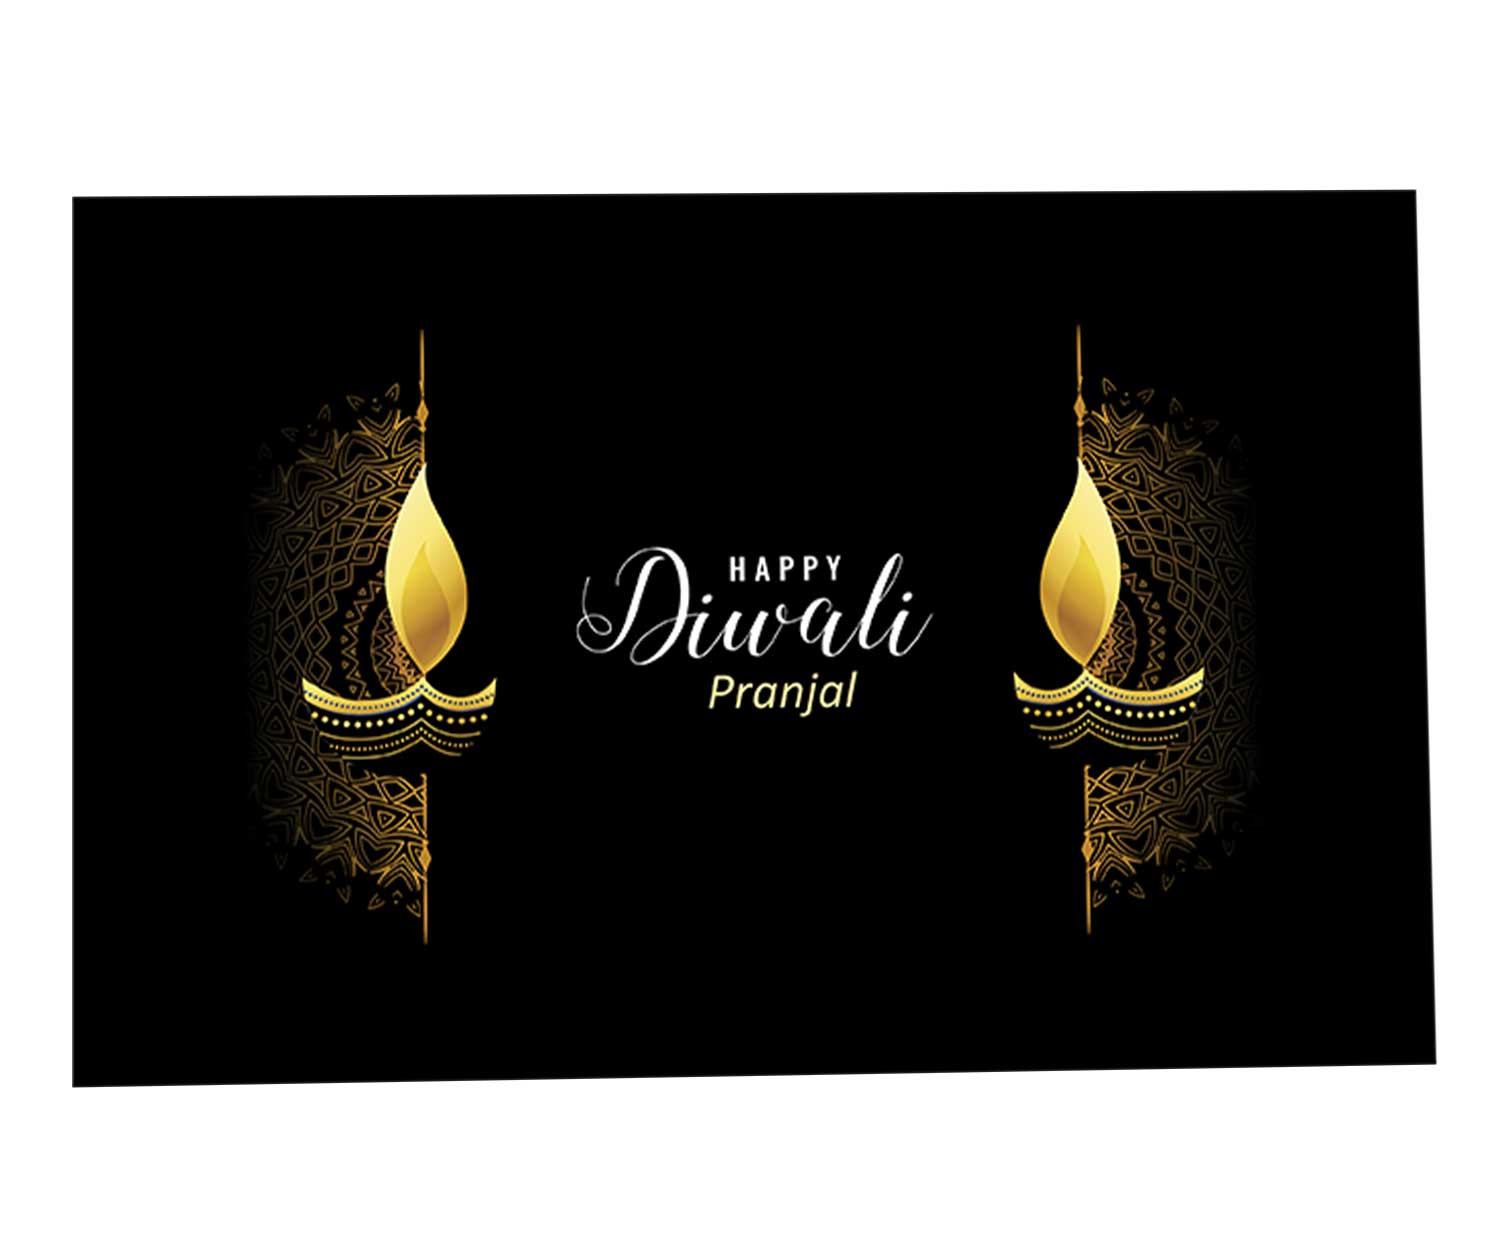 diwali crackers gift box online,diwali faral gift box,diwali chocolate gift box,diwali gift boxes wholesale